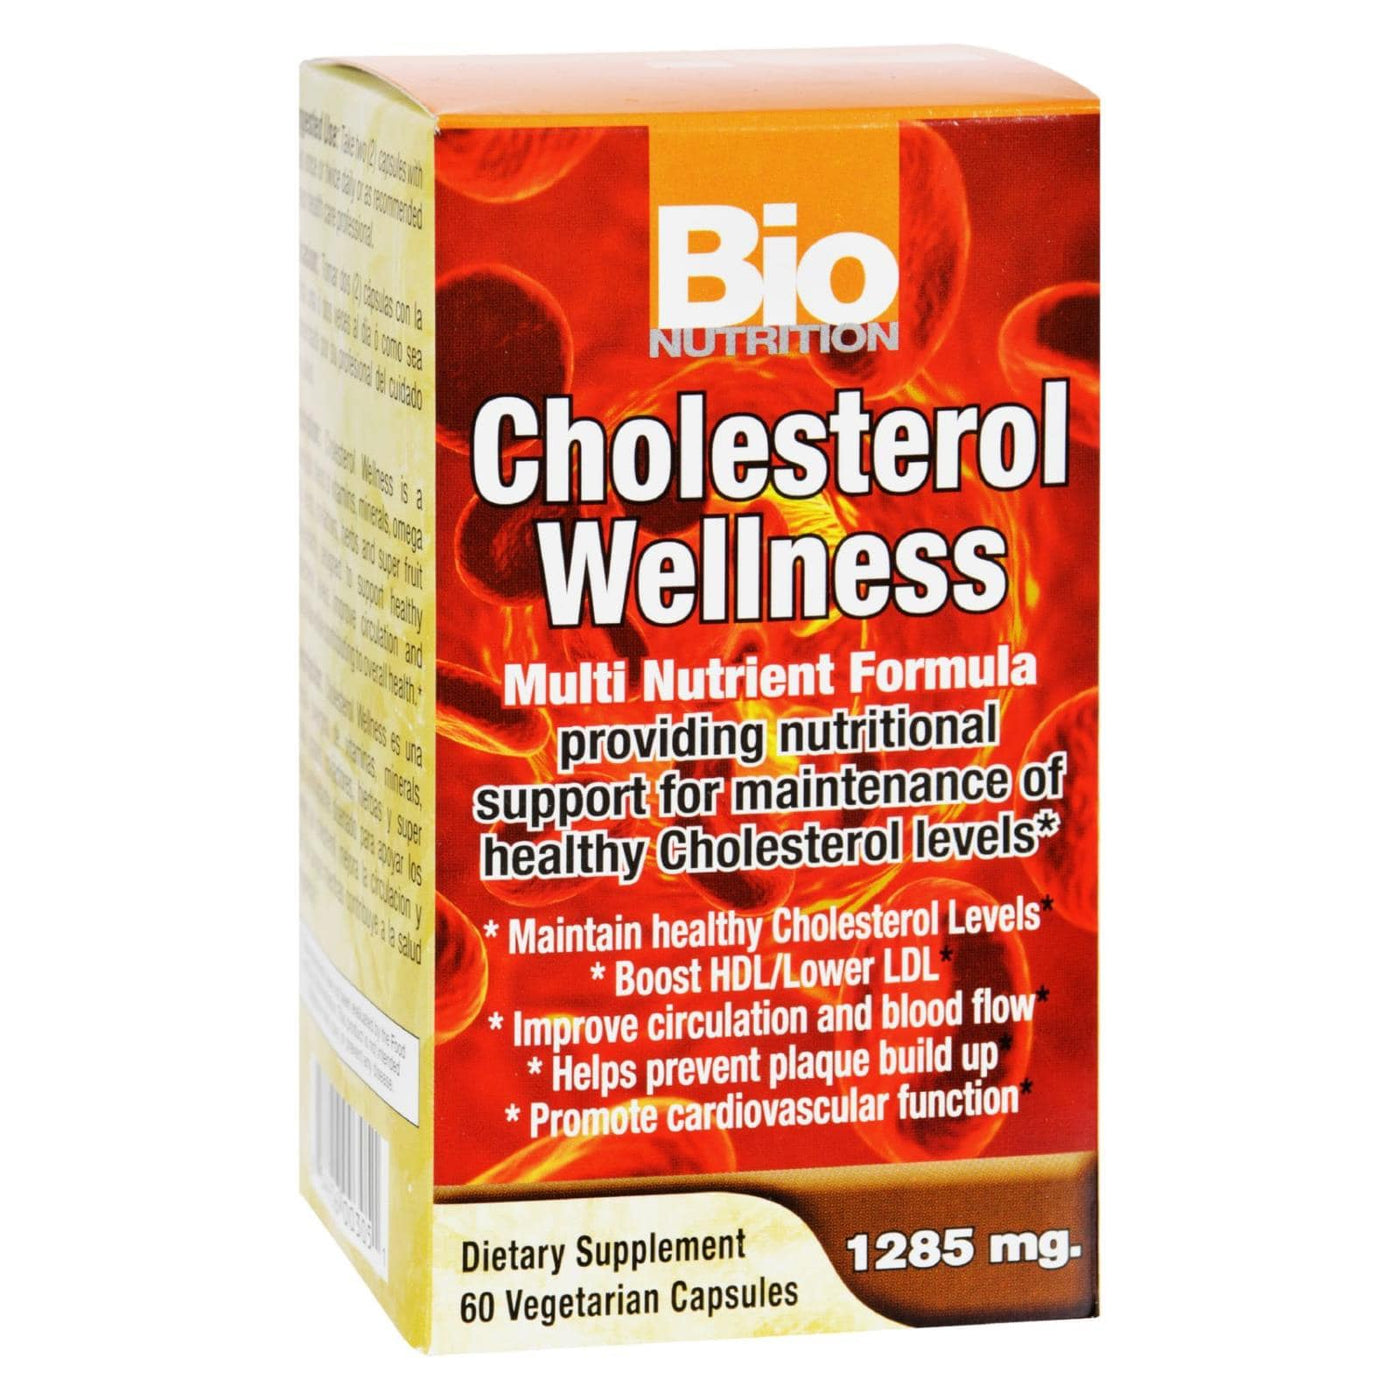 Bio Nutrition - Cholesterol Wellness - 60 Vegetarian Capsules | OnlyNaturals.us